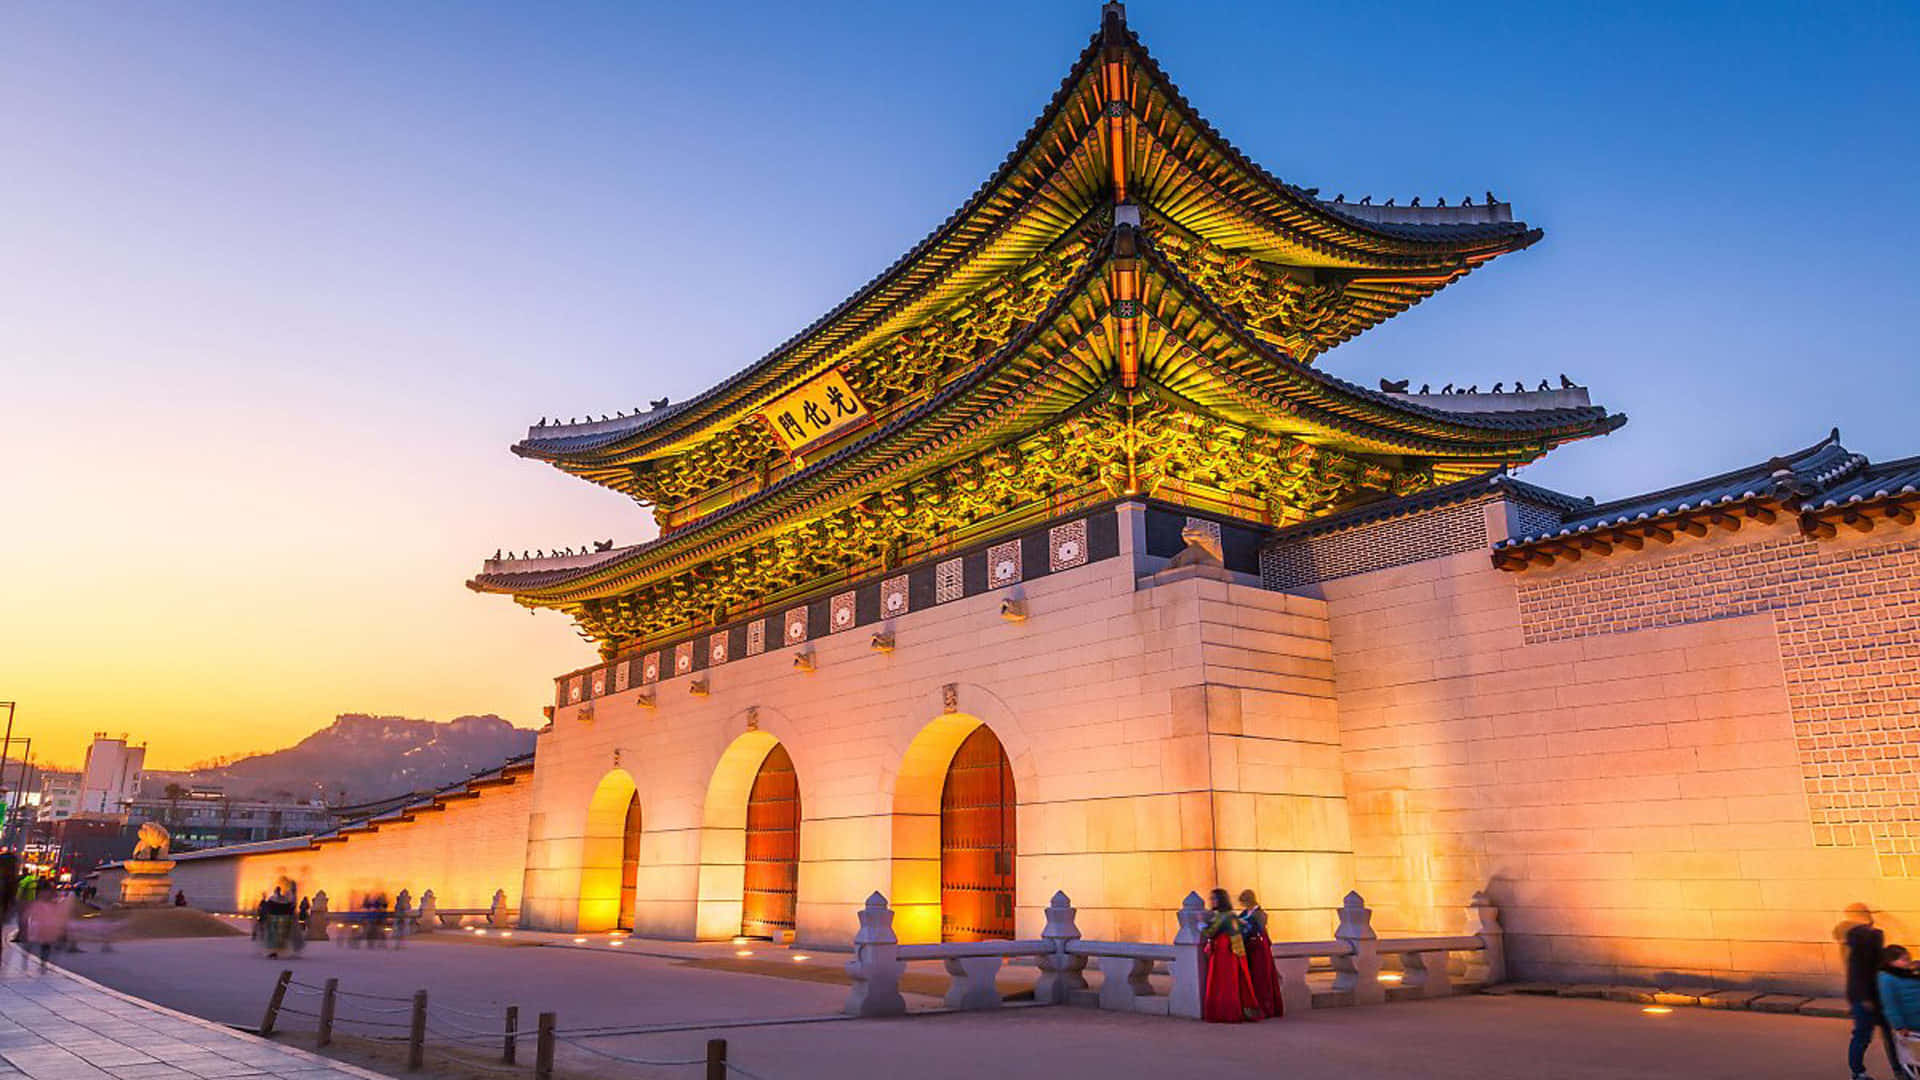 Gyeongbokgung Palace Lit Up At Sunset Picture